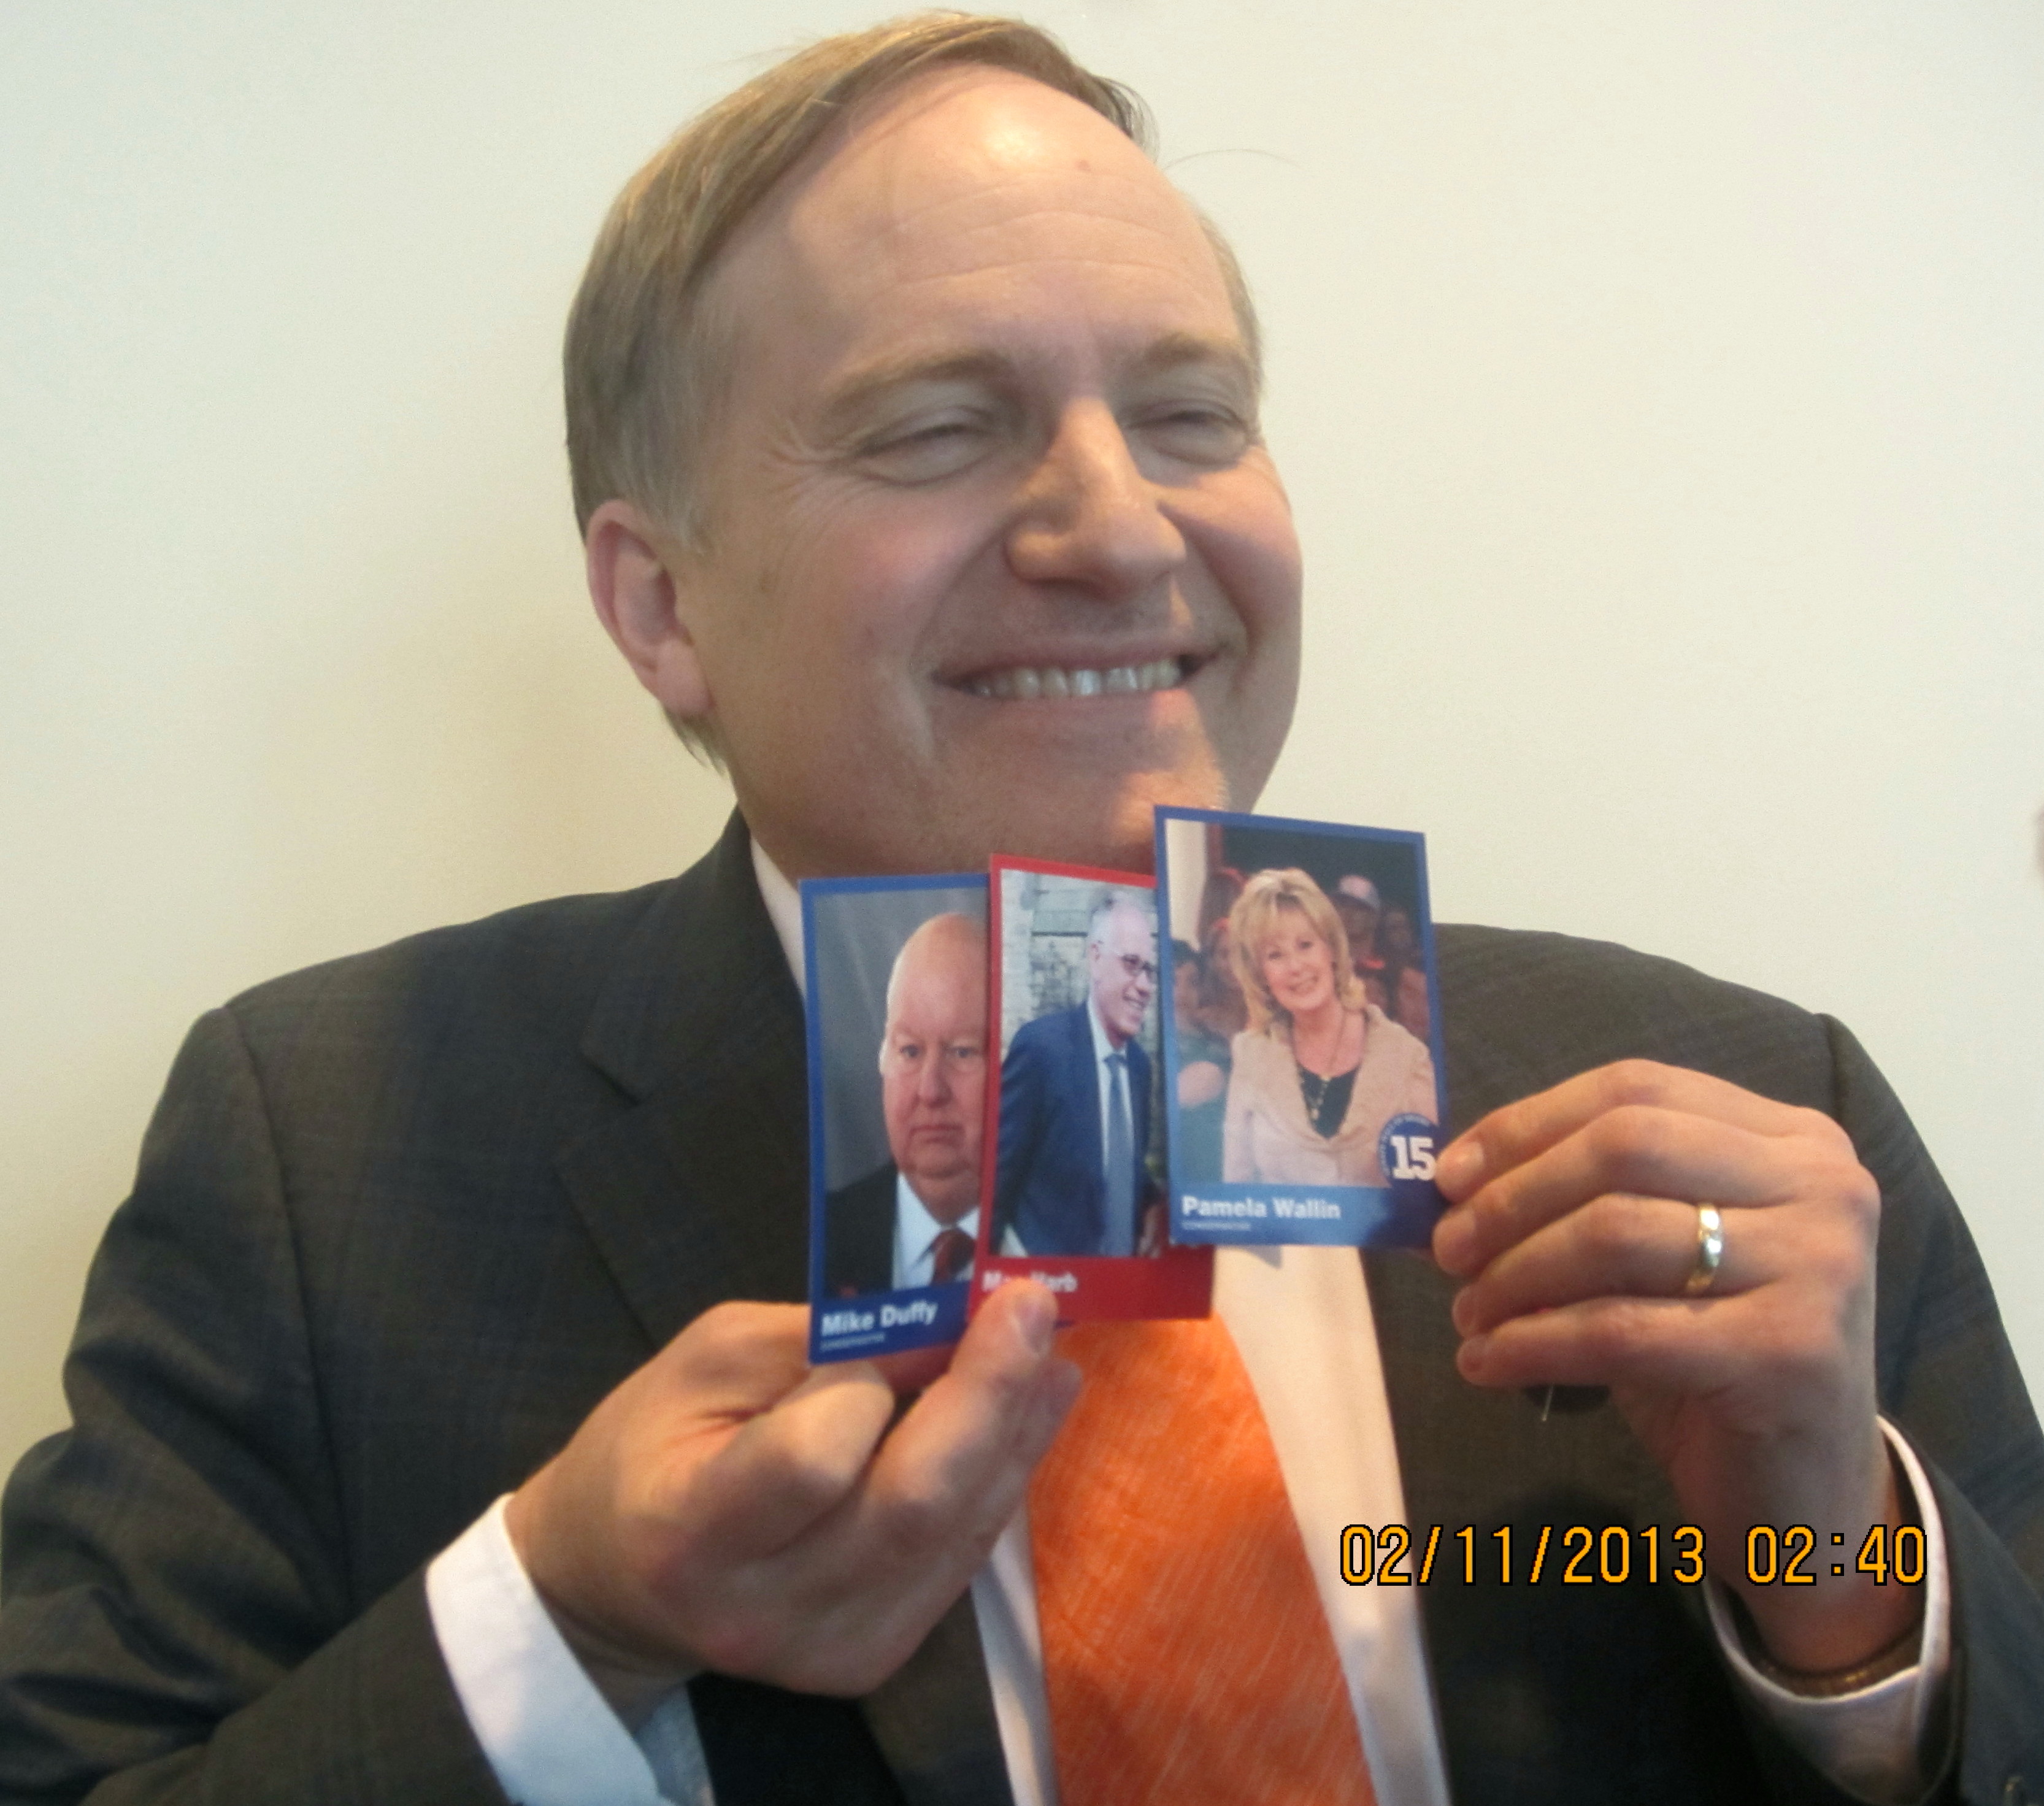 MP Peter Julian holds up trading cards showing Senators